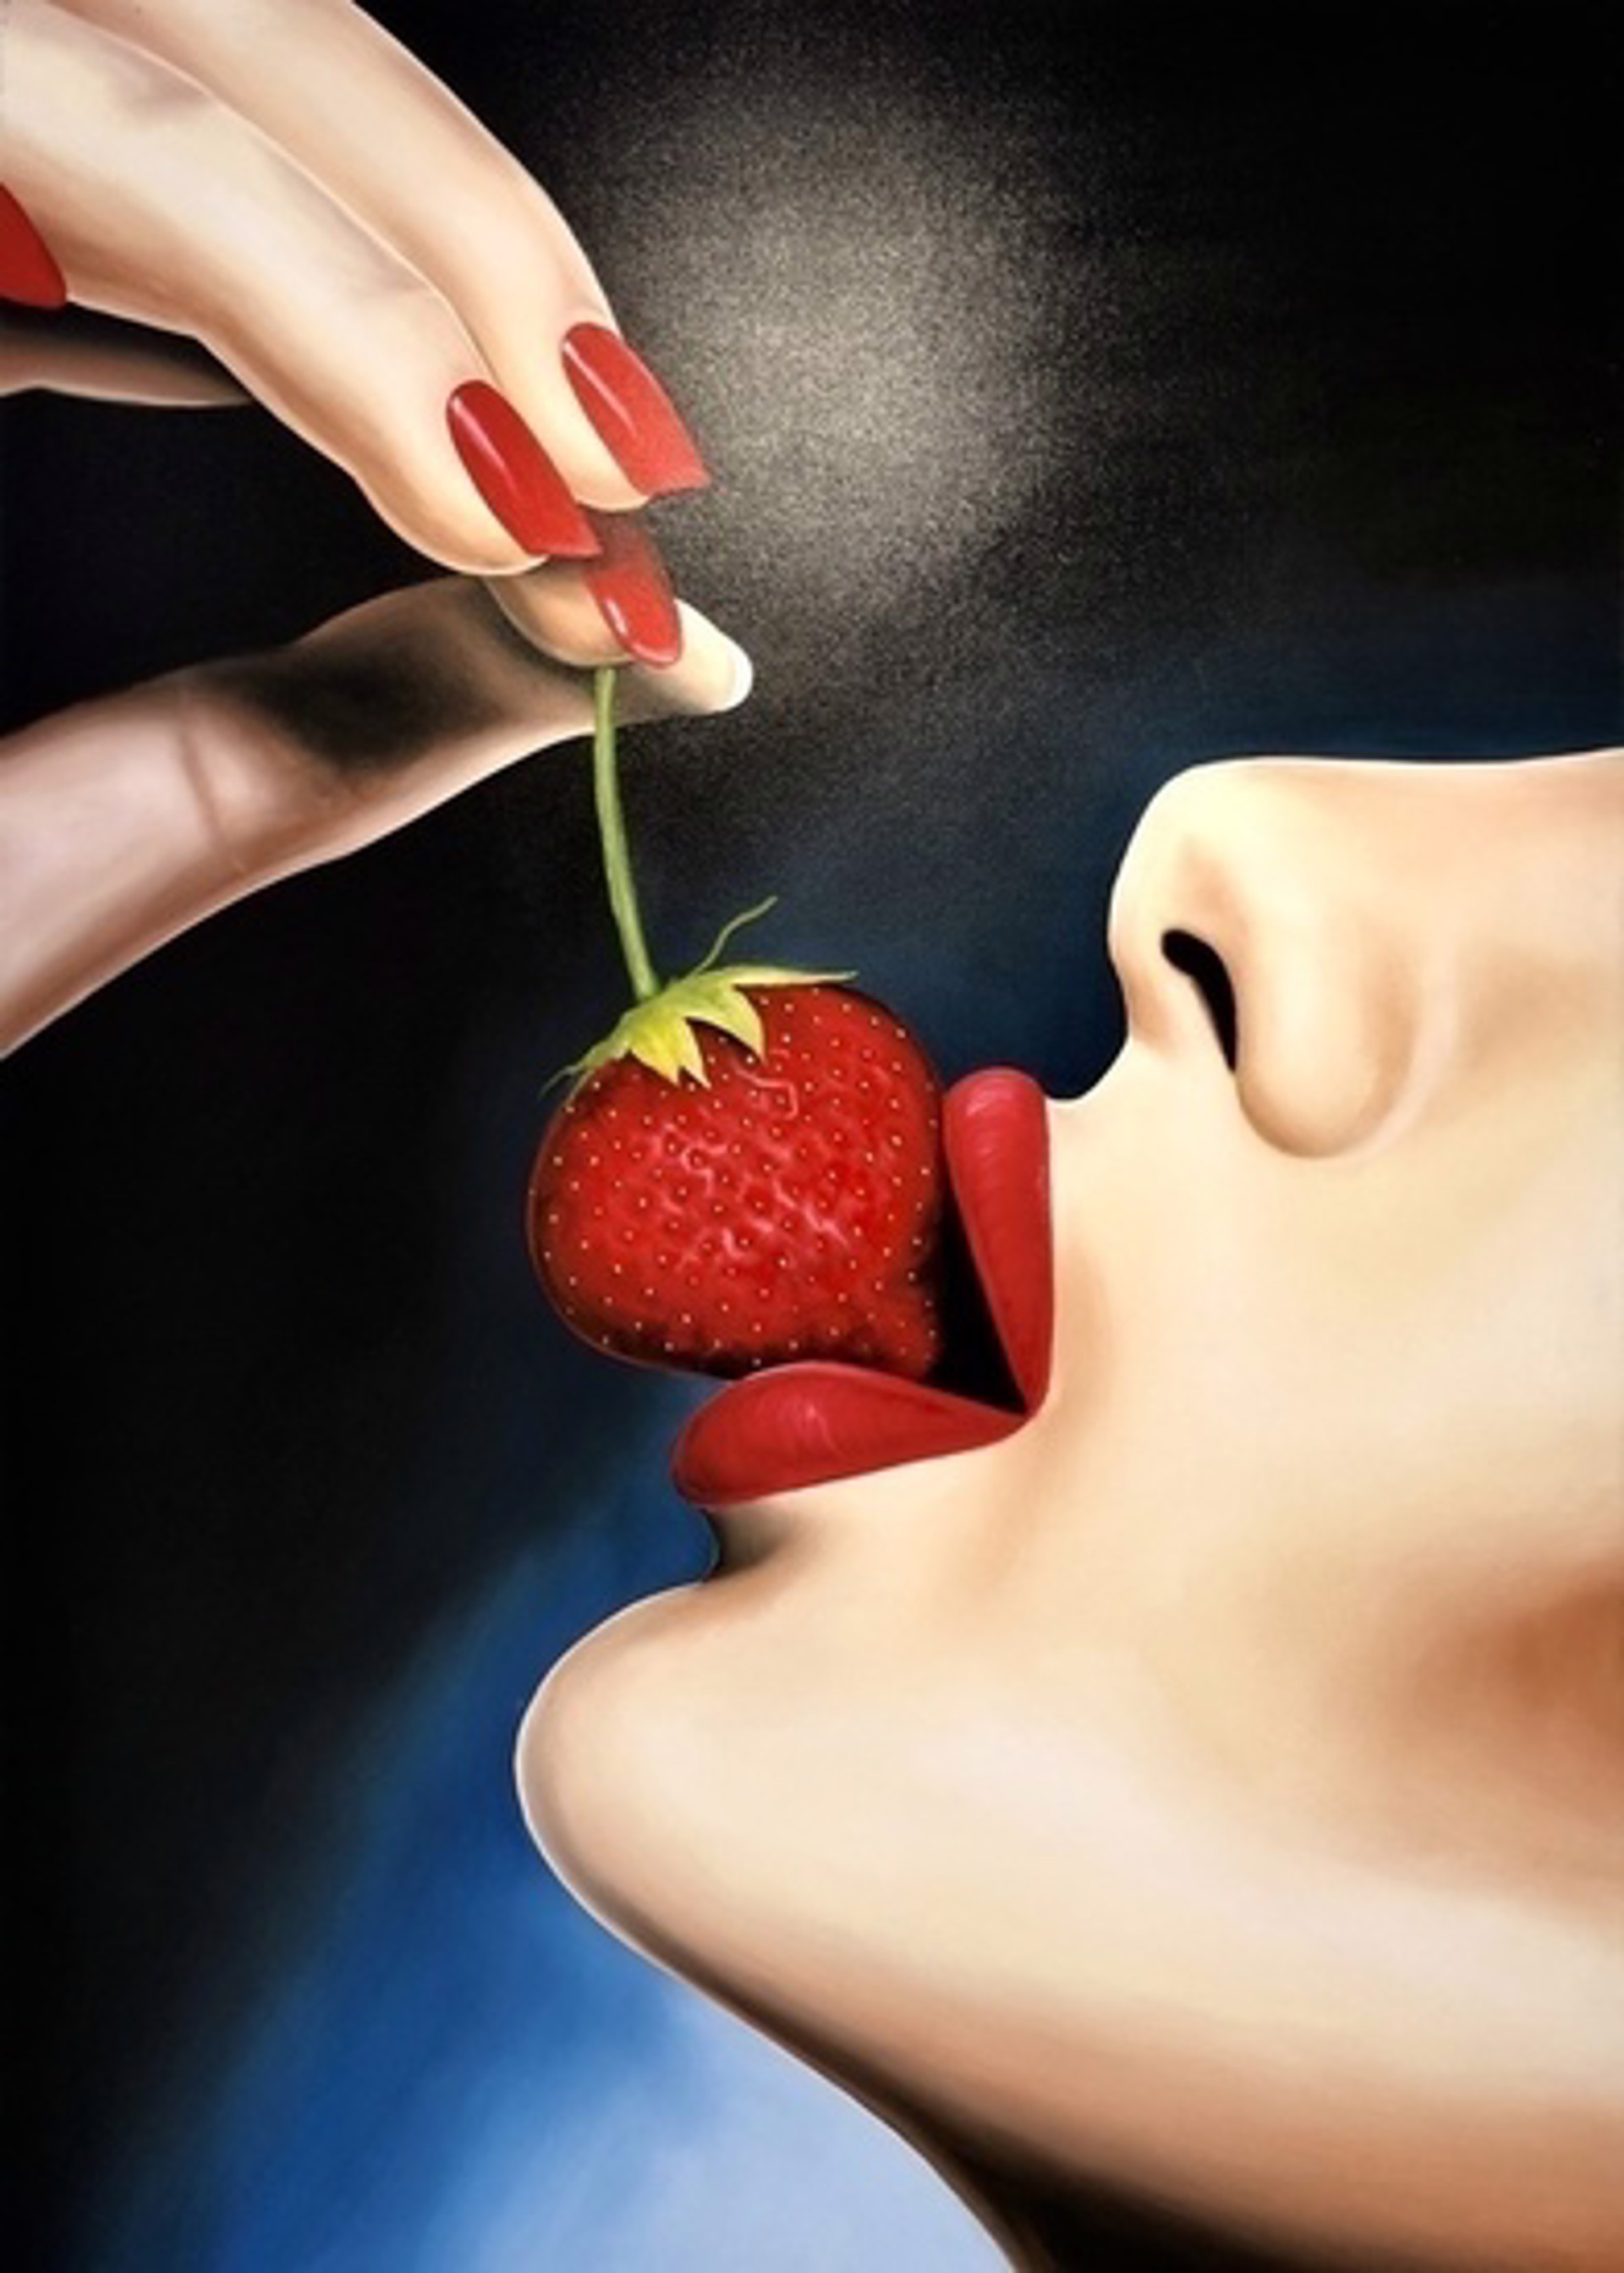 "Strawberry Kiss" by BuMa Project